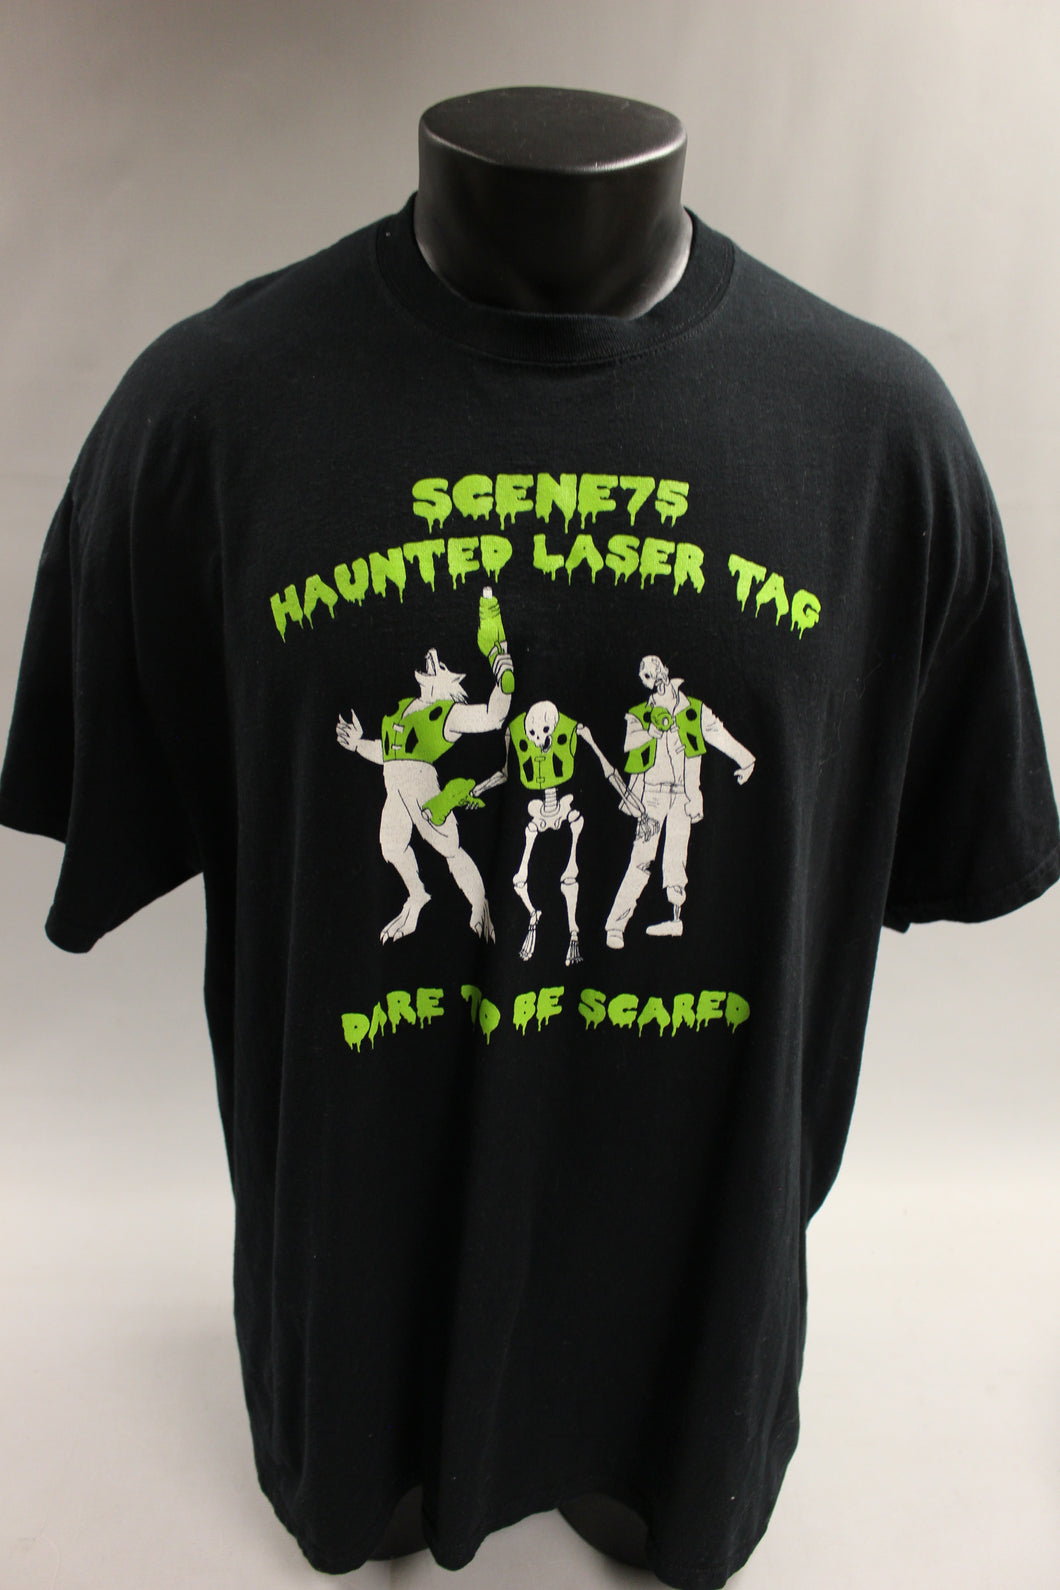 Scene75 Haunted Laser Tag Men's T Shirt Size XLarge -Used